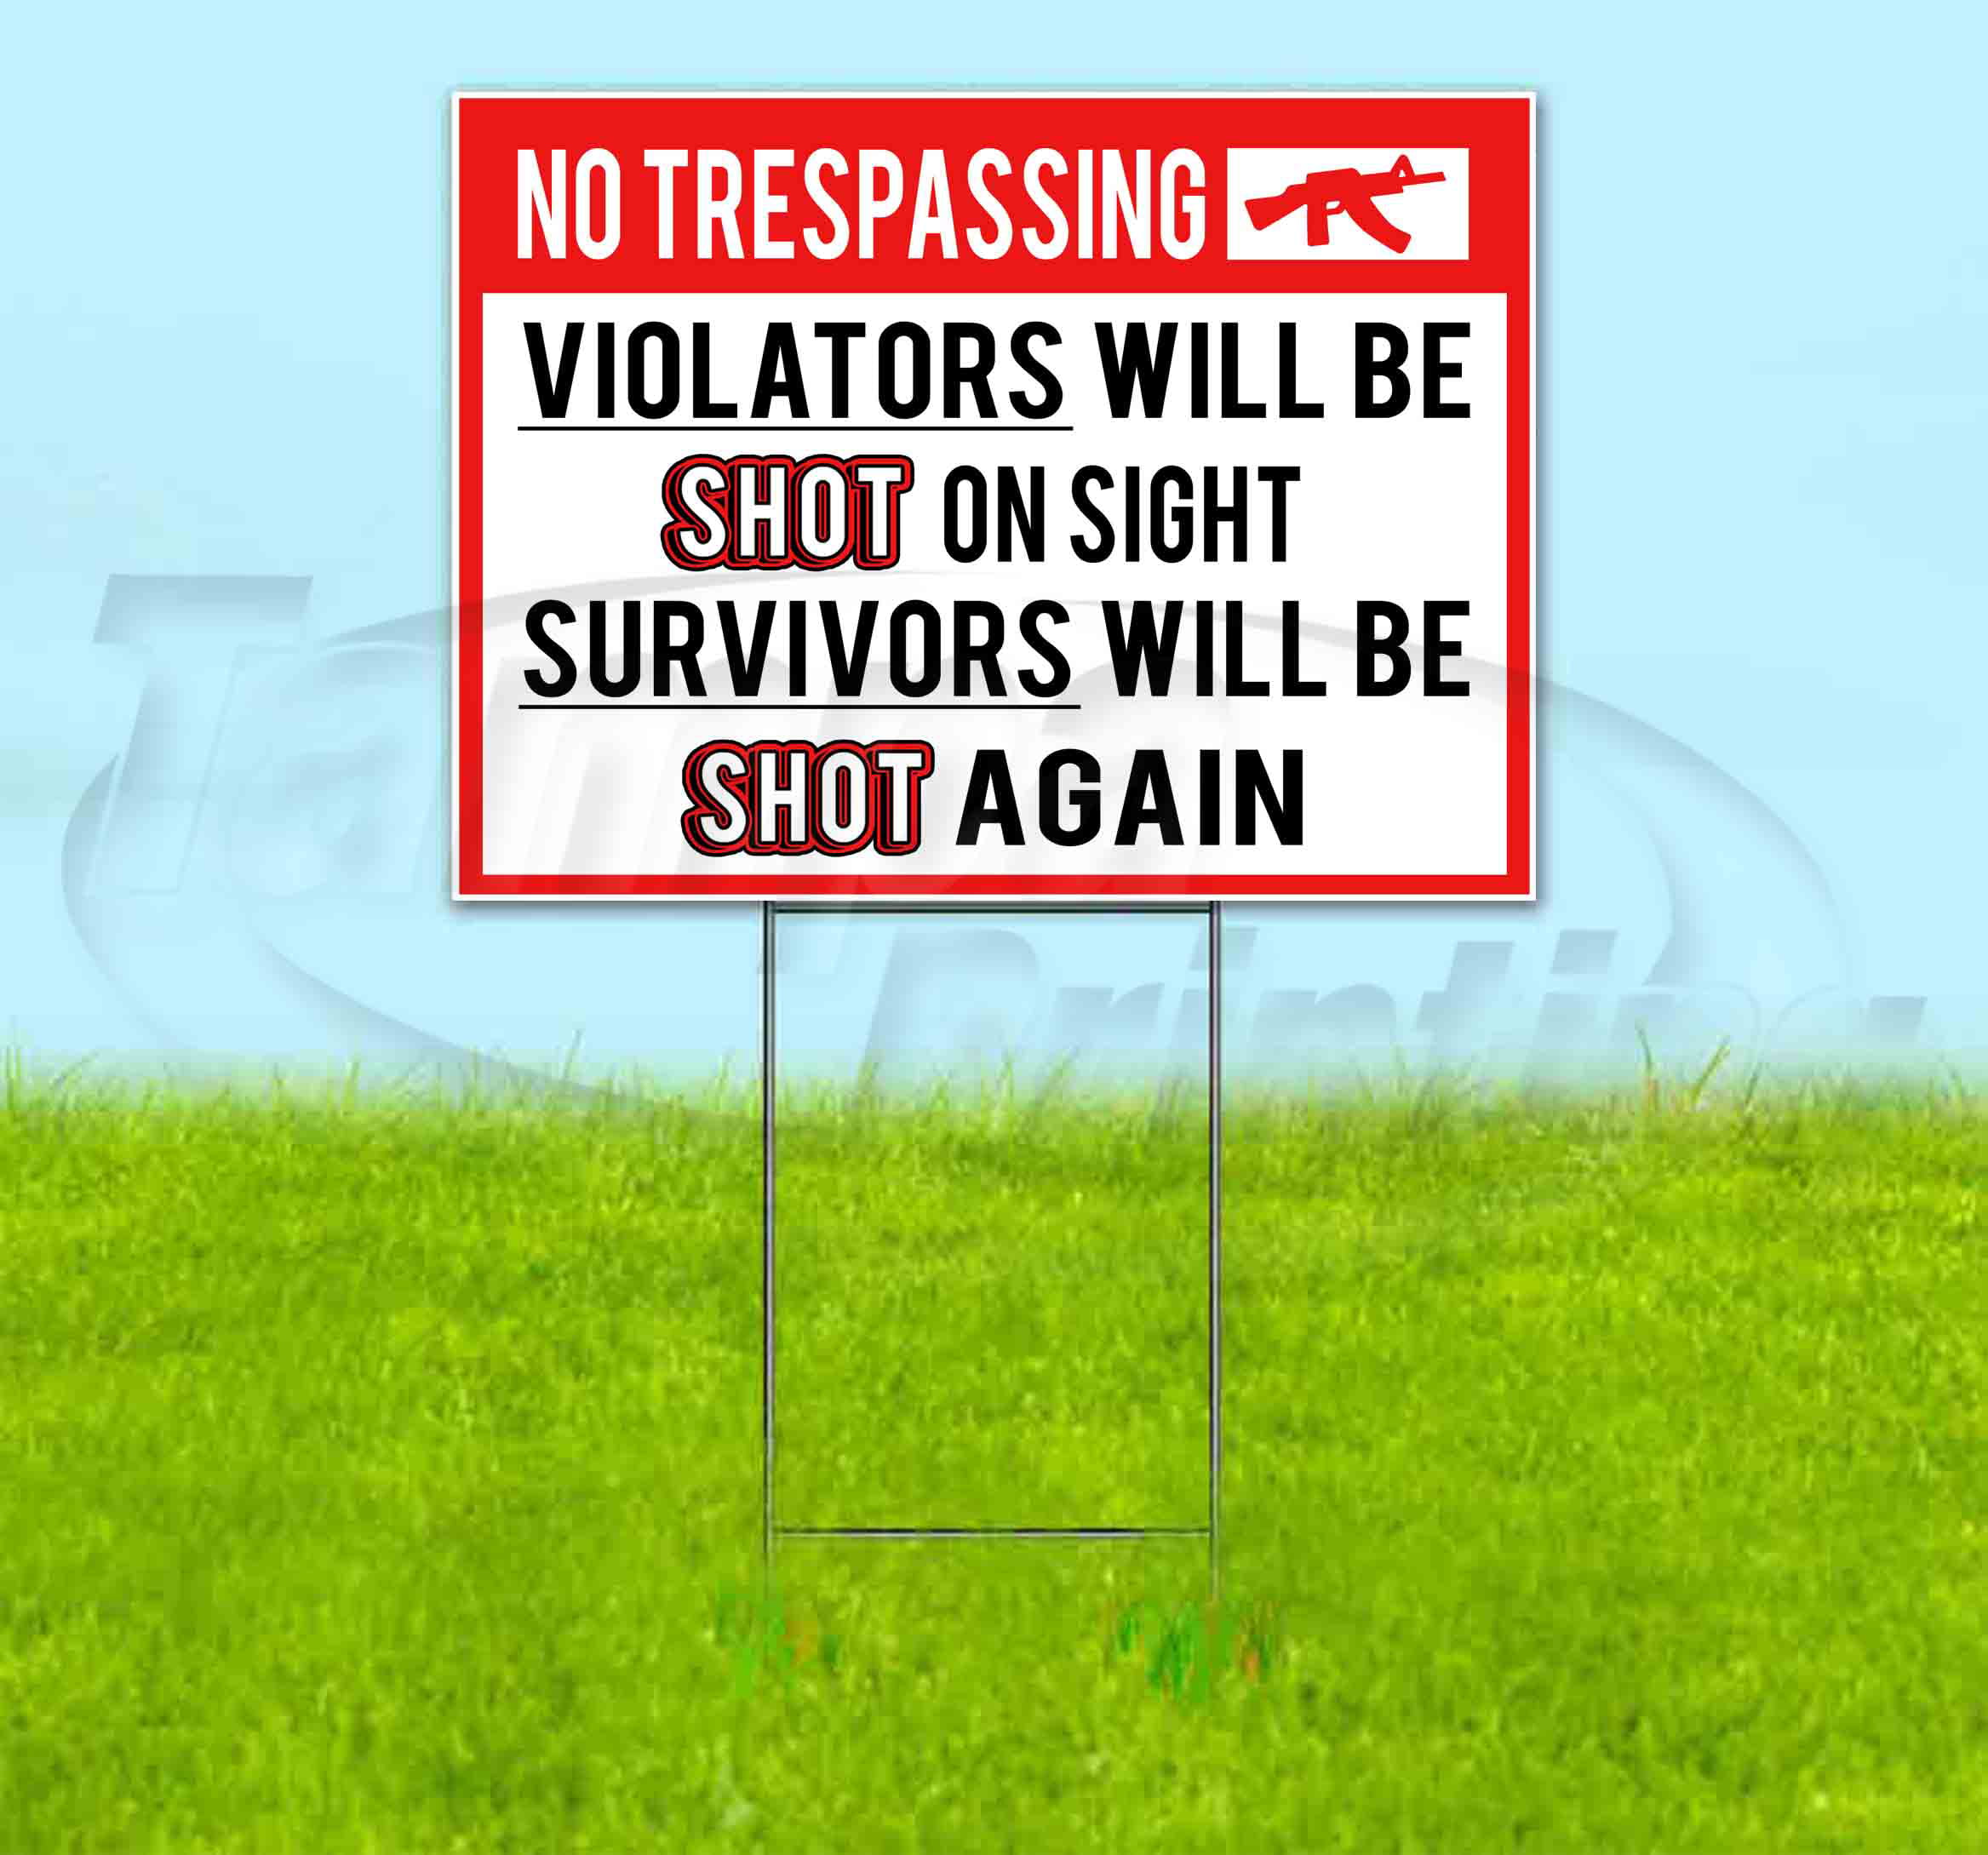 No trespassing violators will be shot survivors will be shot again outdoor metal 